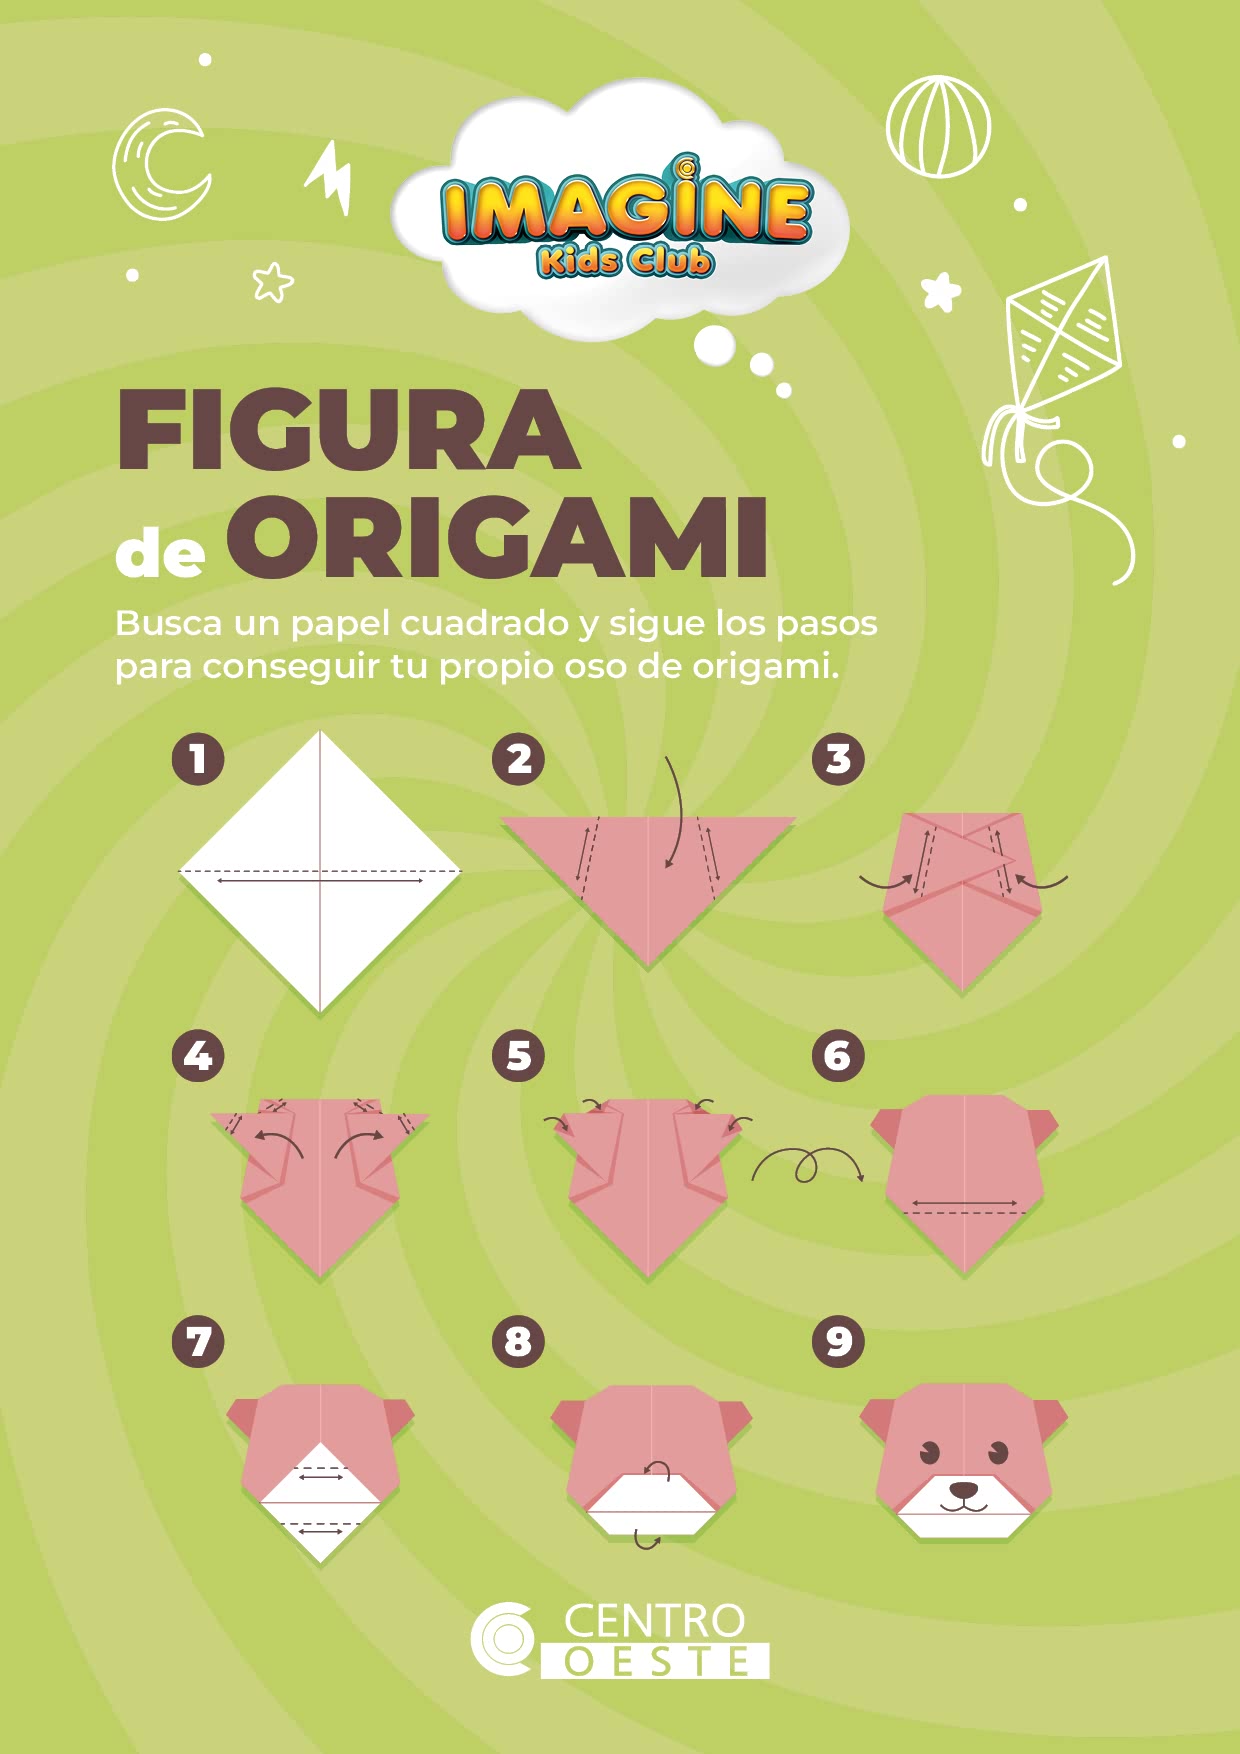 Imagine kids club origami